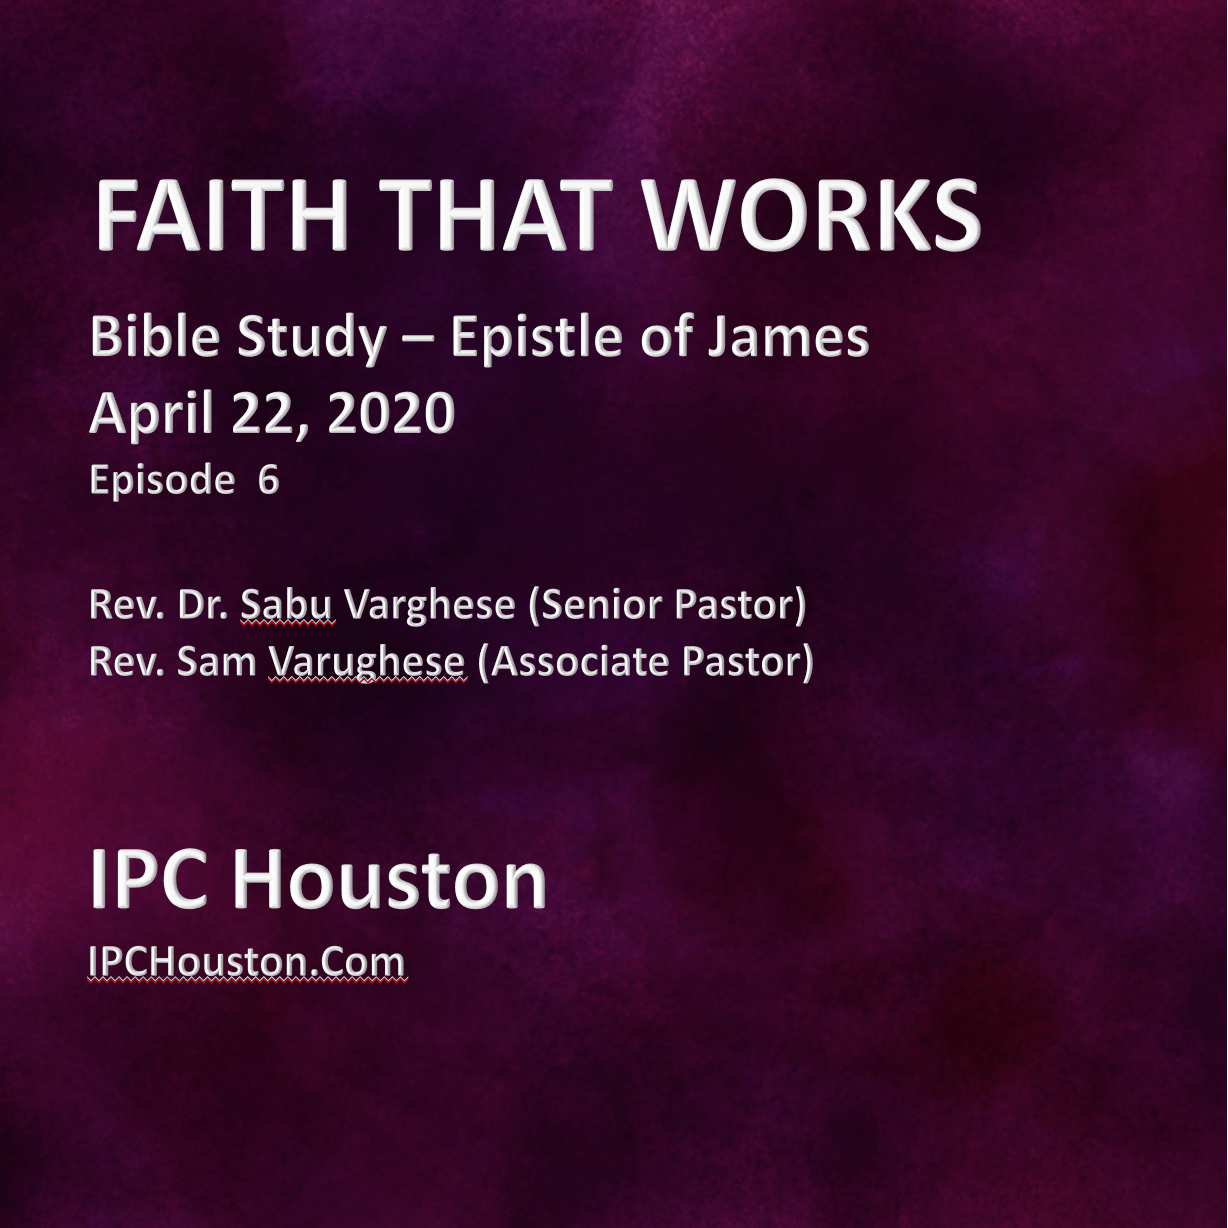 IPC HOUSTON BIBLE STUDY - APRIL 22, 2020